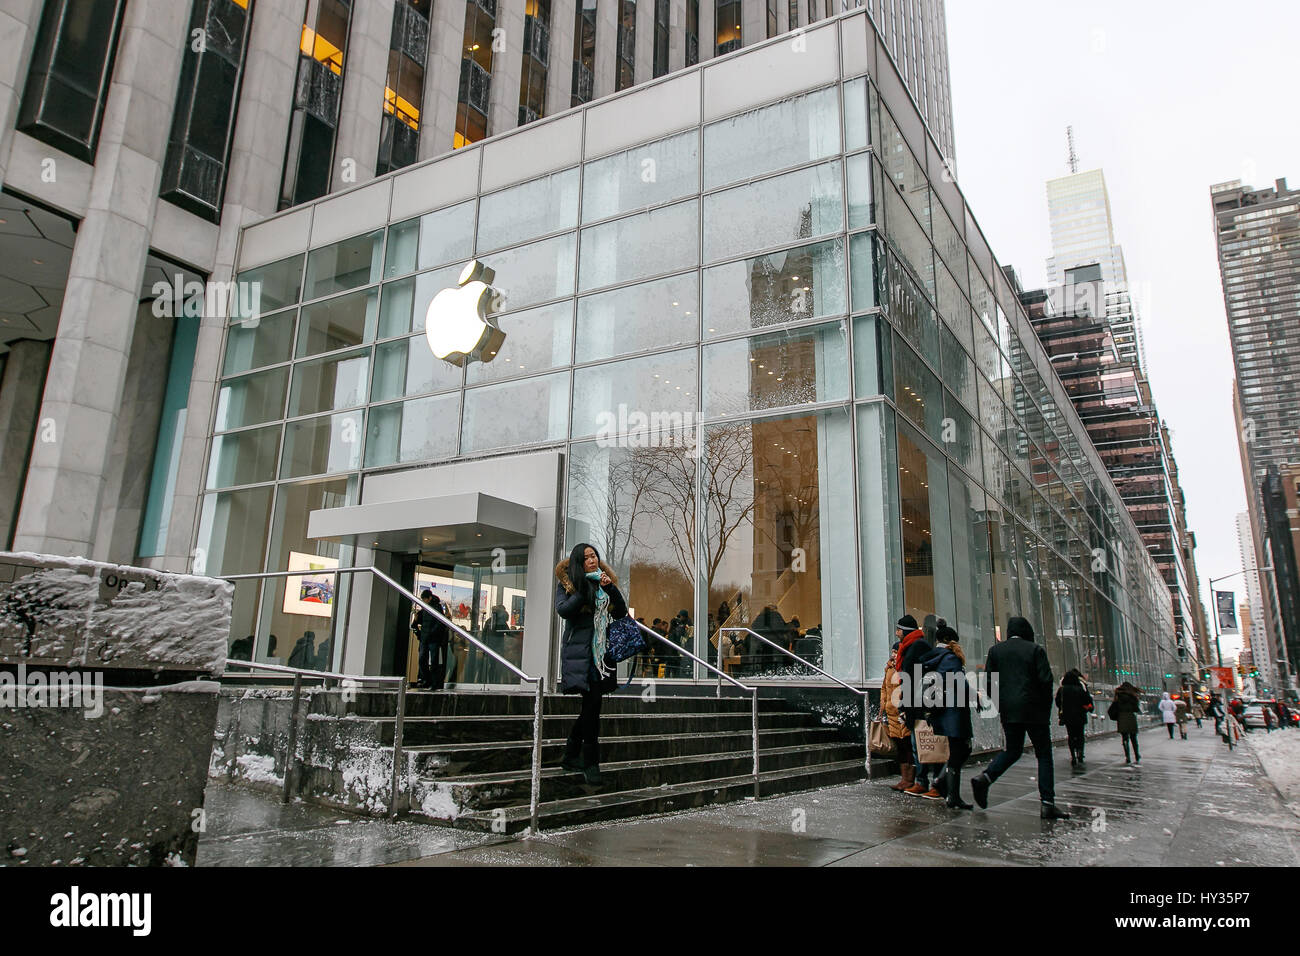 Fifth Avenue - Apple Store - Apple